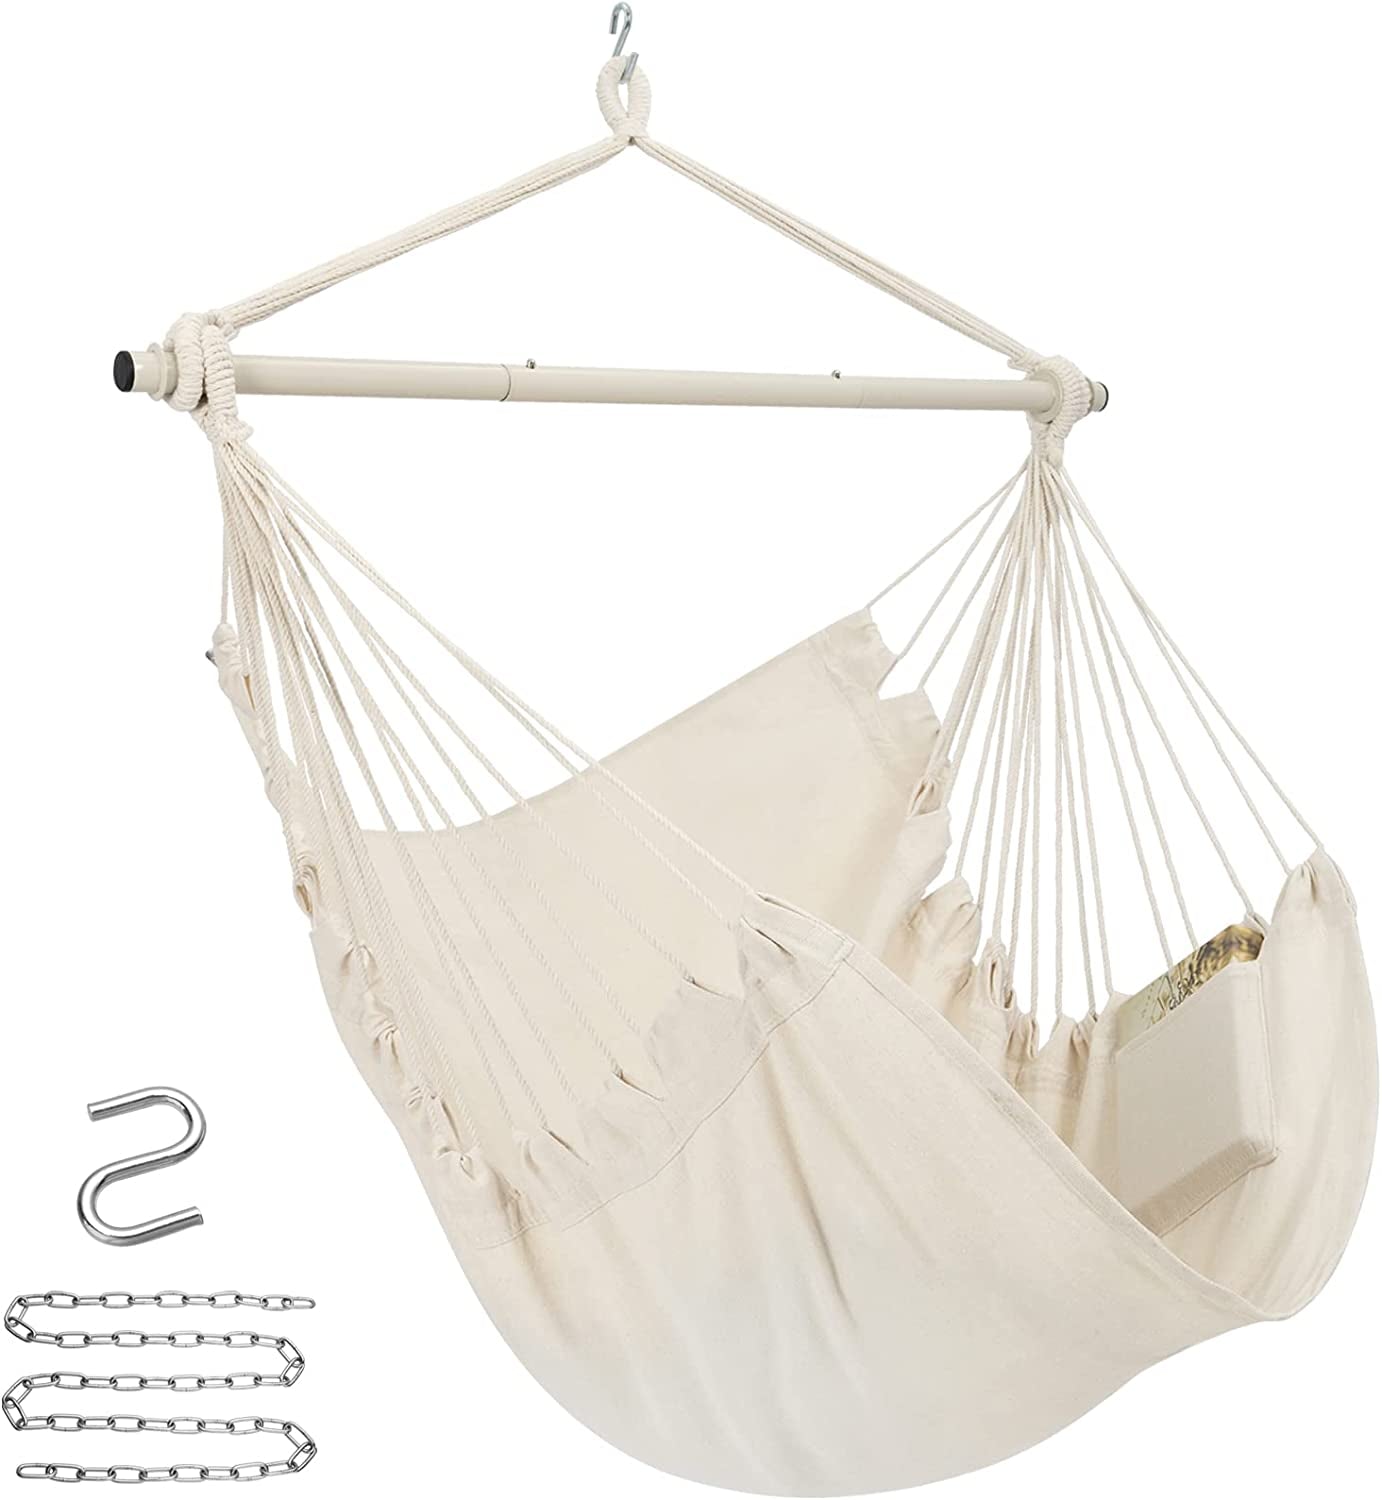 Hammock Chair Hanging Rope Swing, Hanging Kit Swing Hanger, Durability(White)